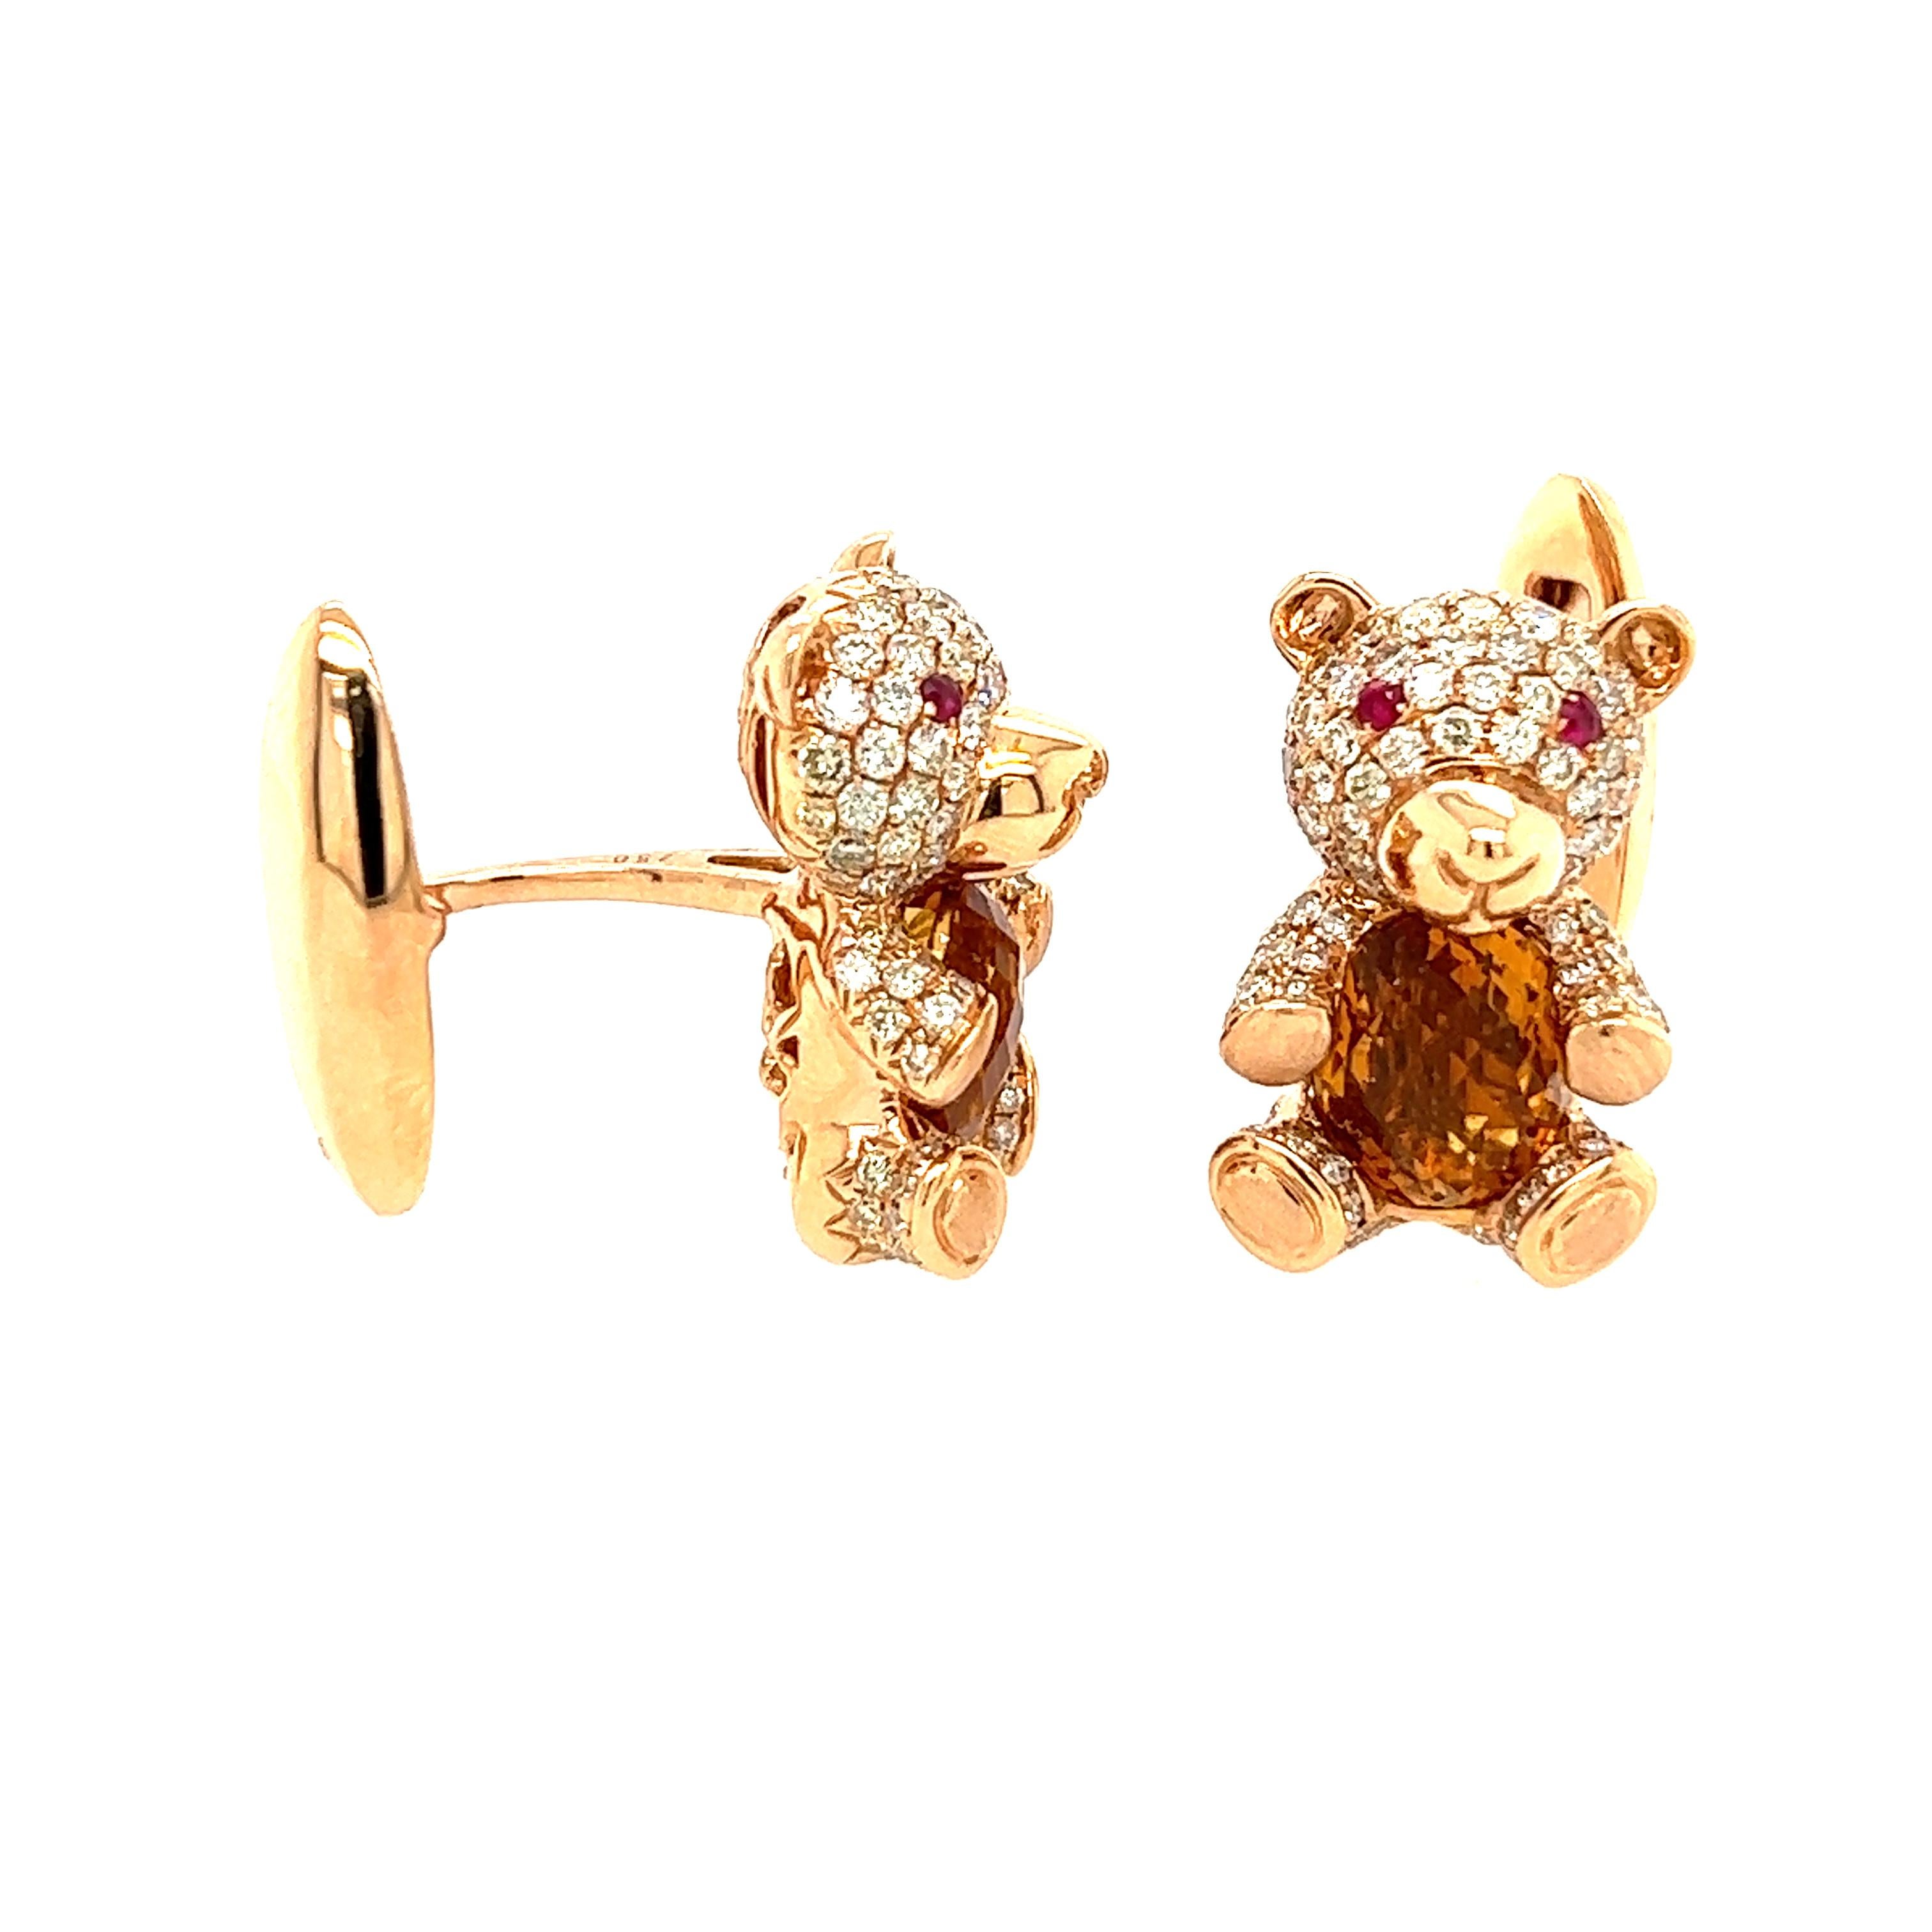 Modern 18K Gold Citrine Bear Cufflinks with Diamonds and Rubies